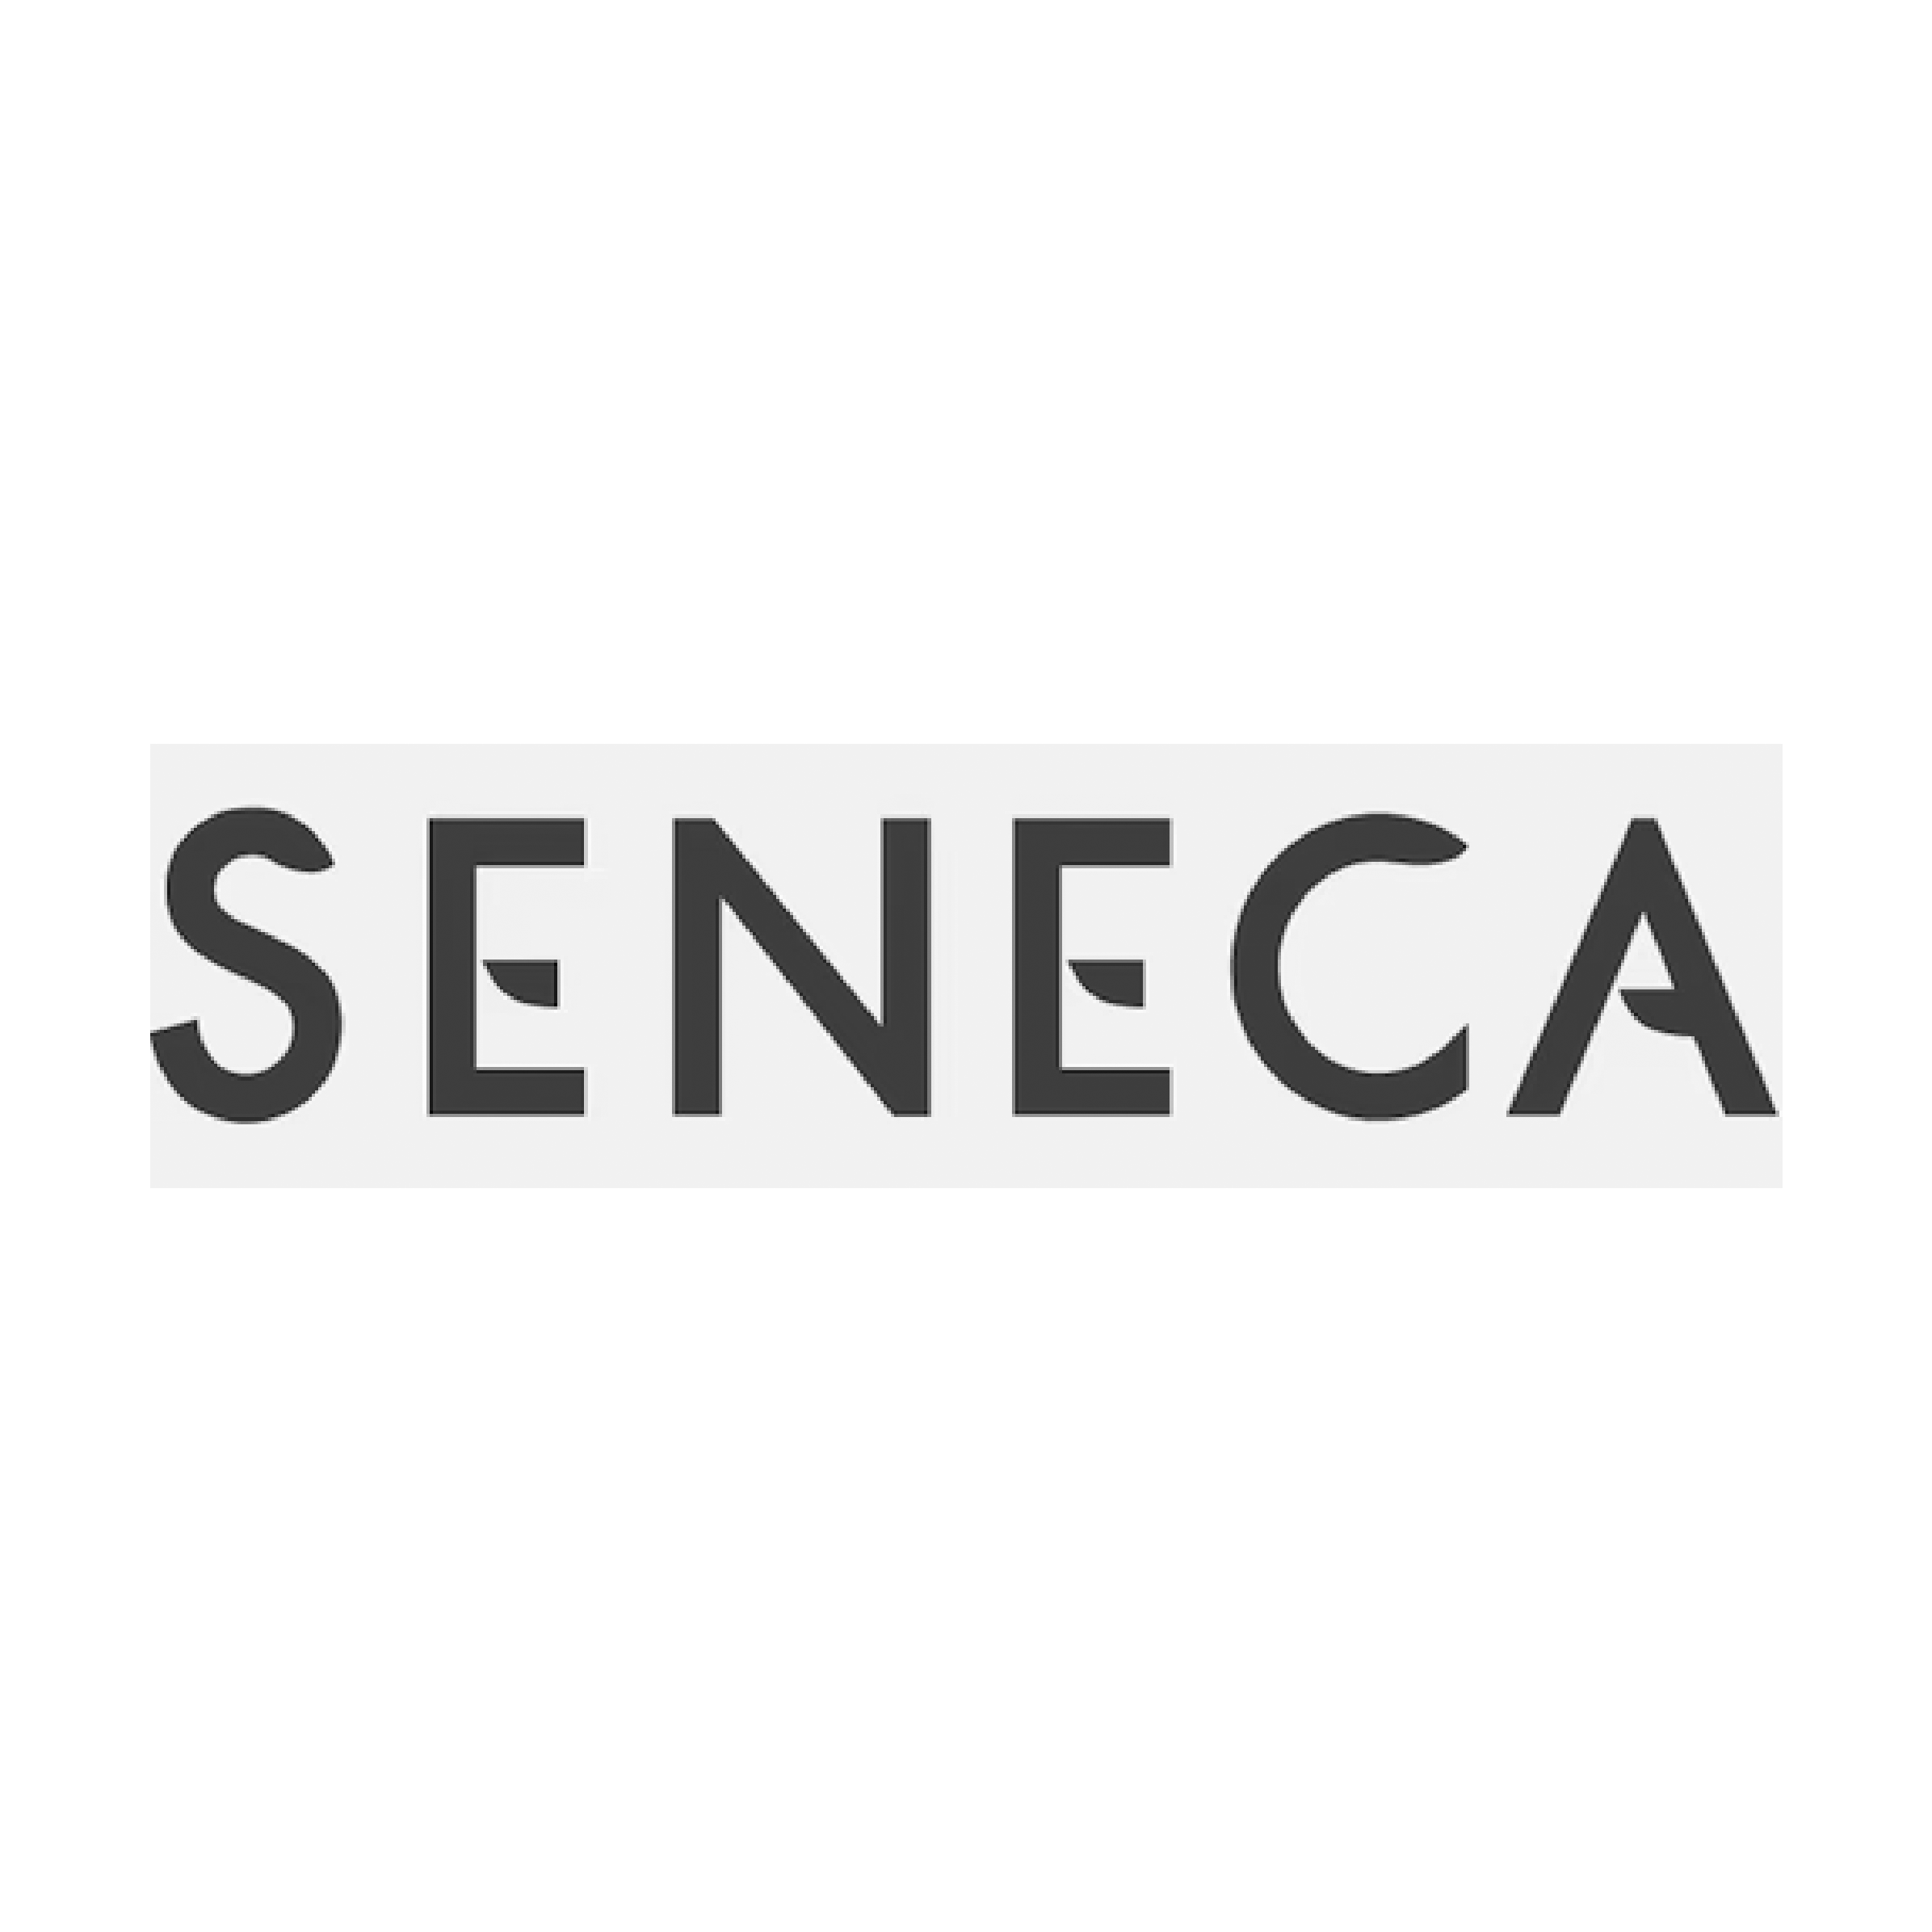 seneca logo.png